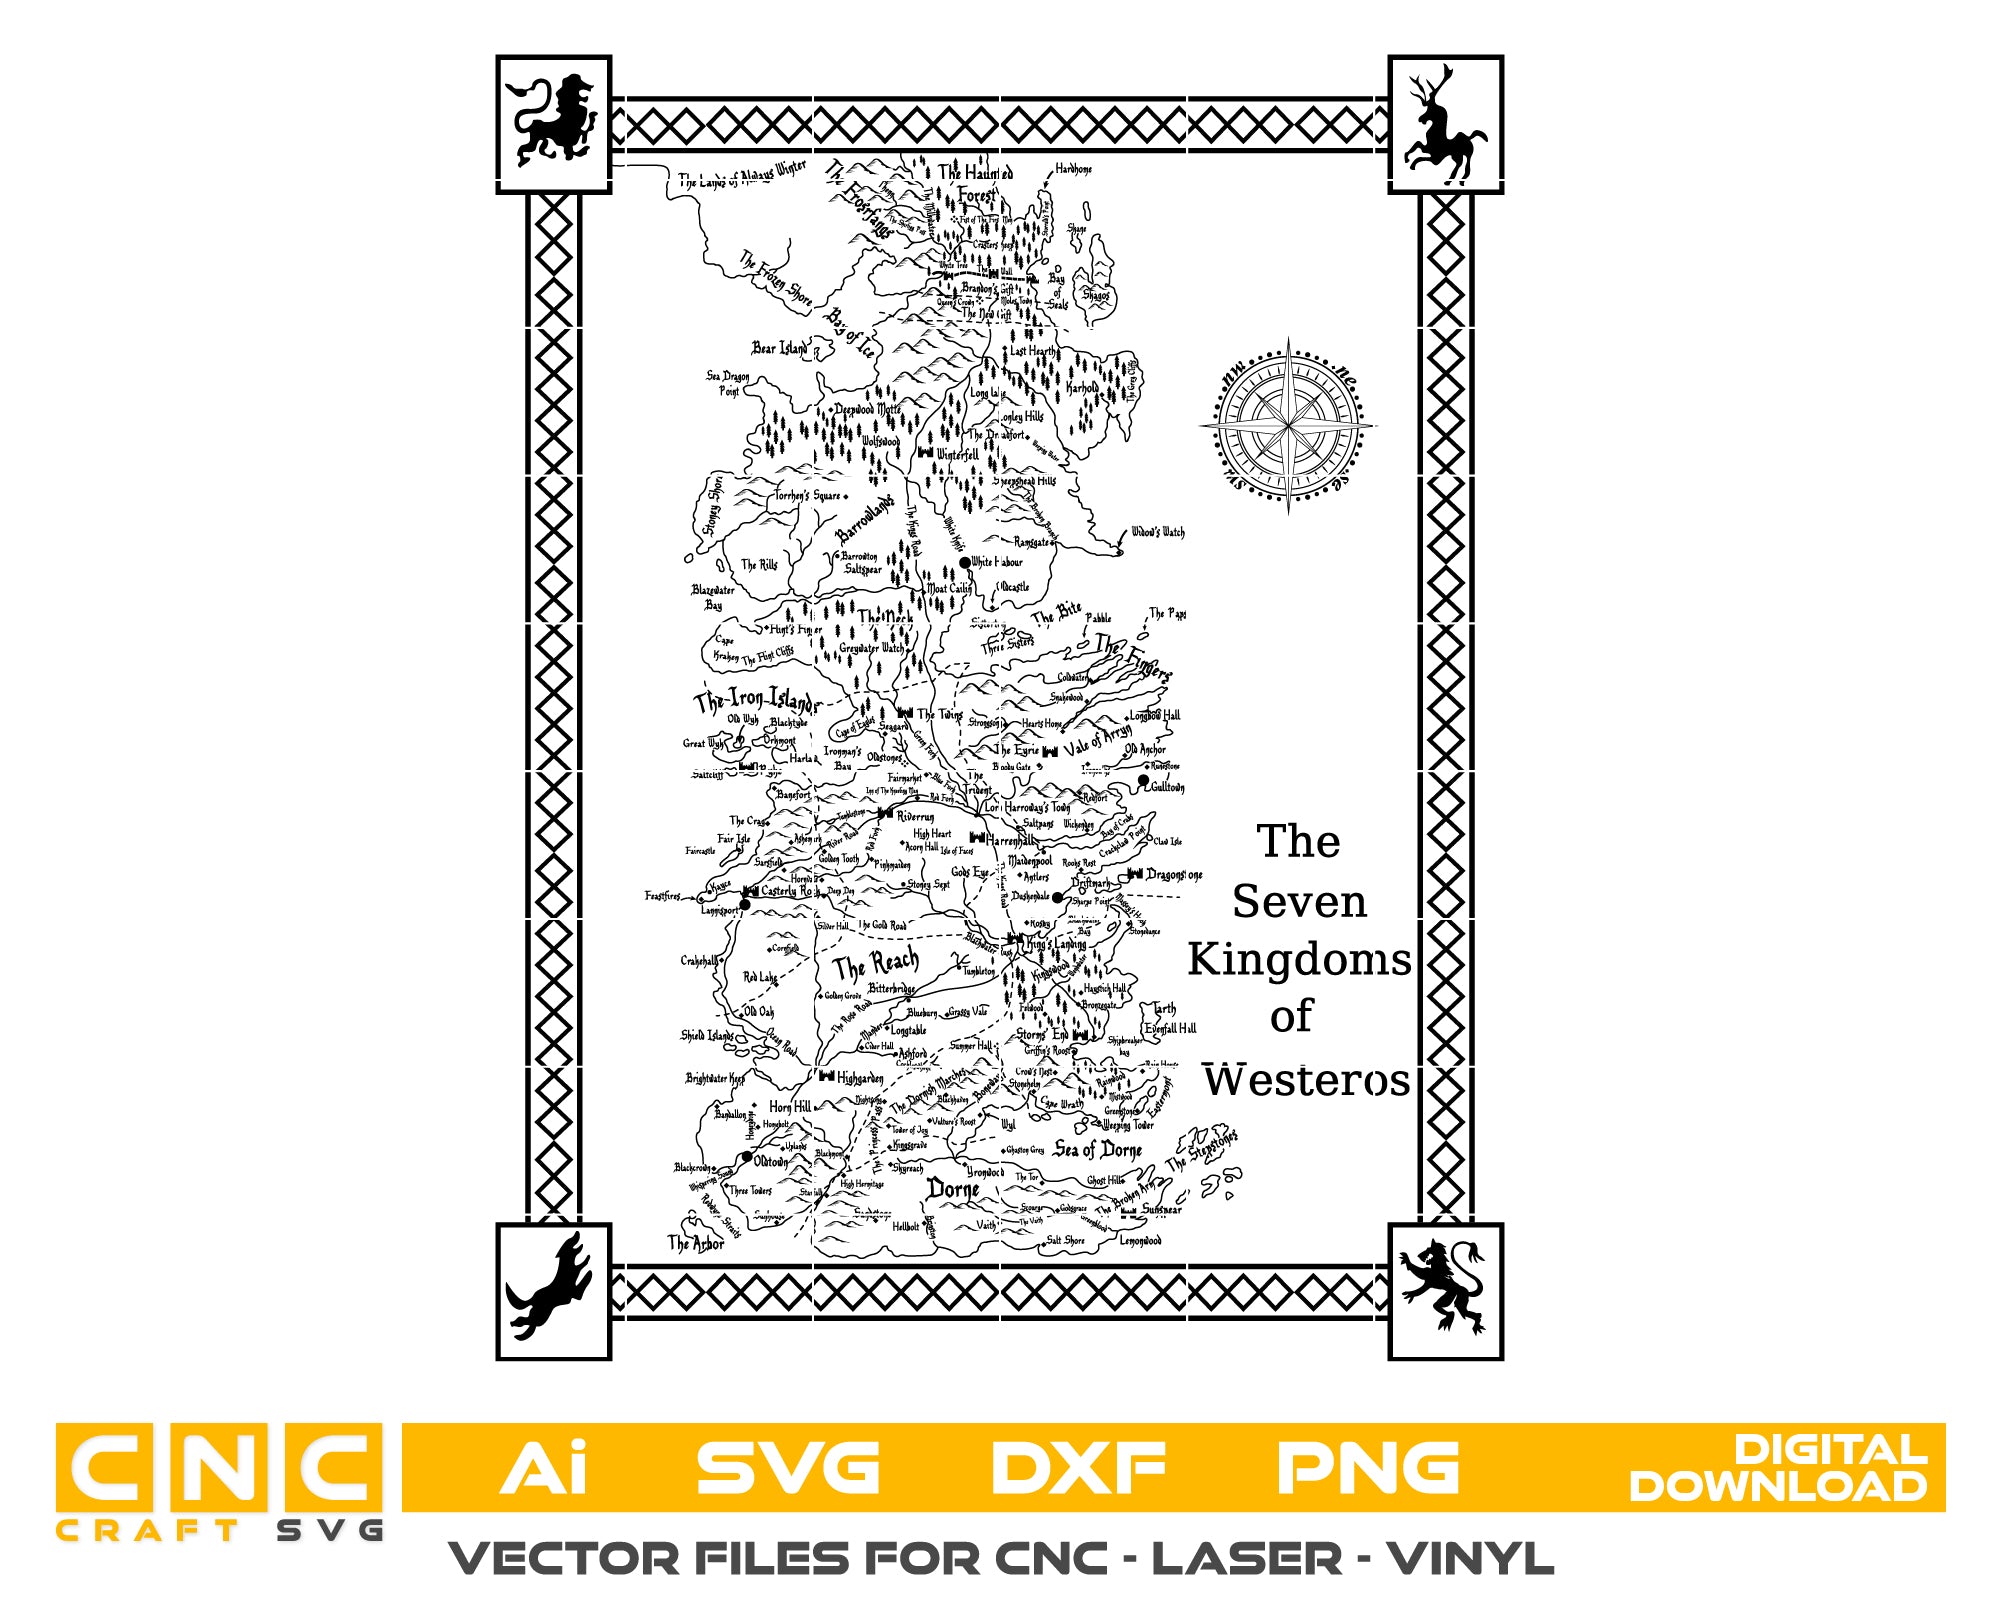 The Seven Kingdoms of Westeros seal vector file